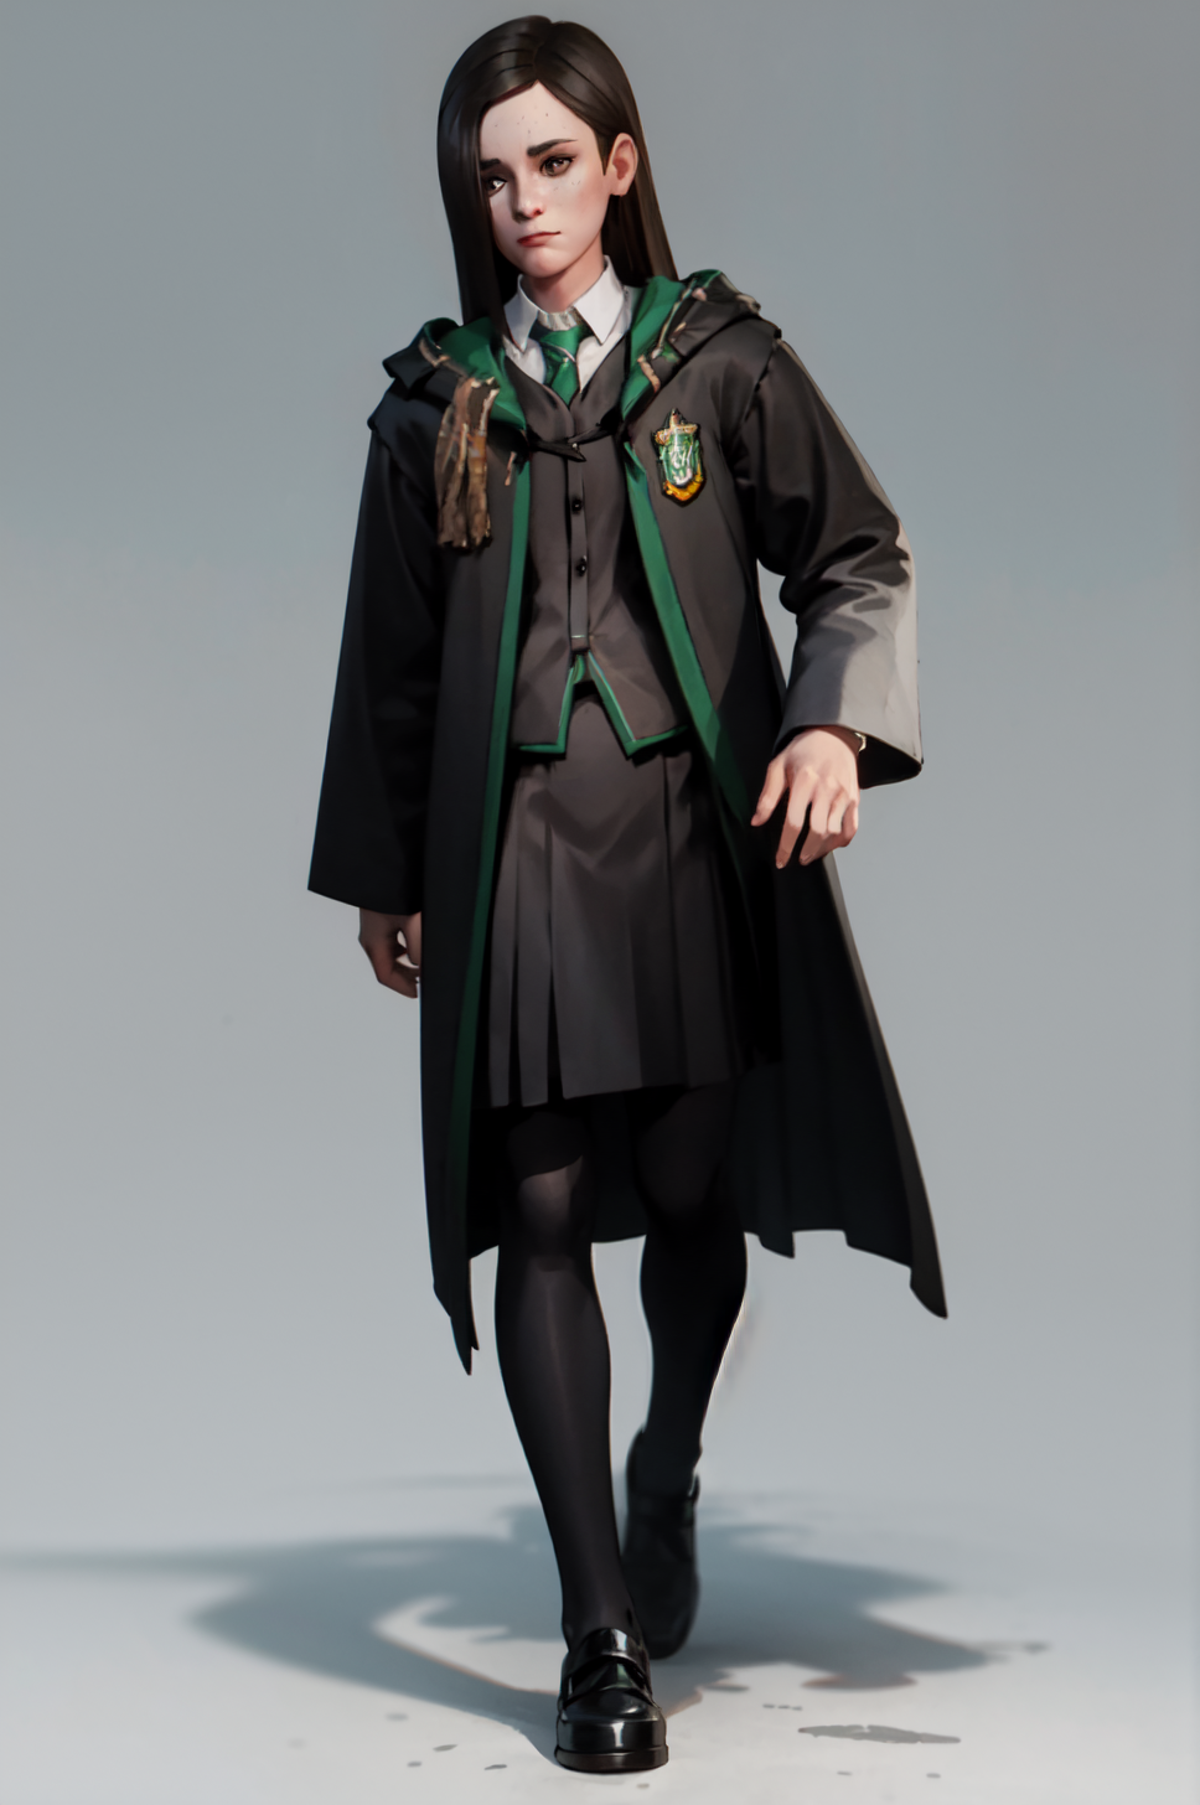 Ismelda Murk - Harry Potter: Hogwarts Mystery image by mrseyker